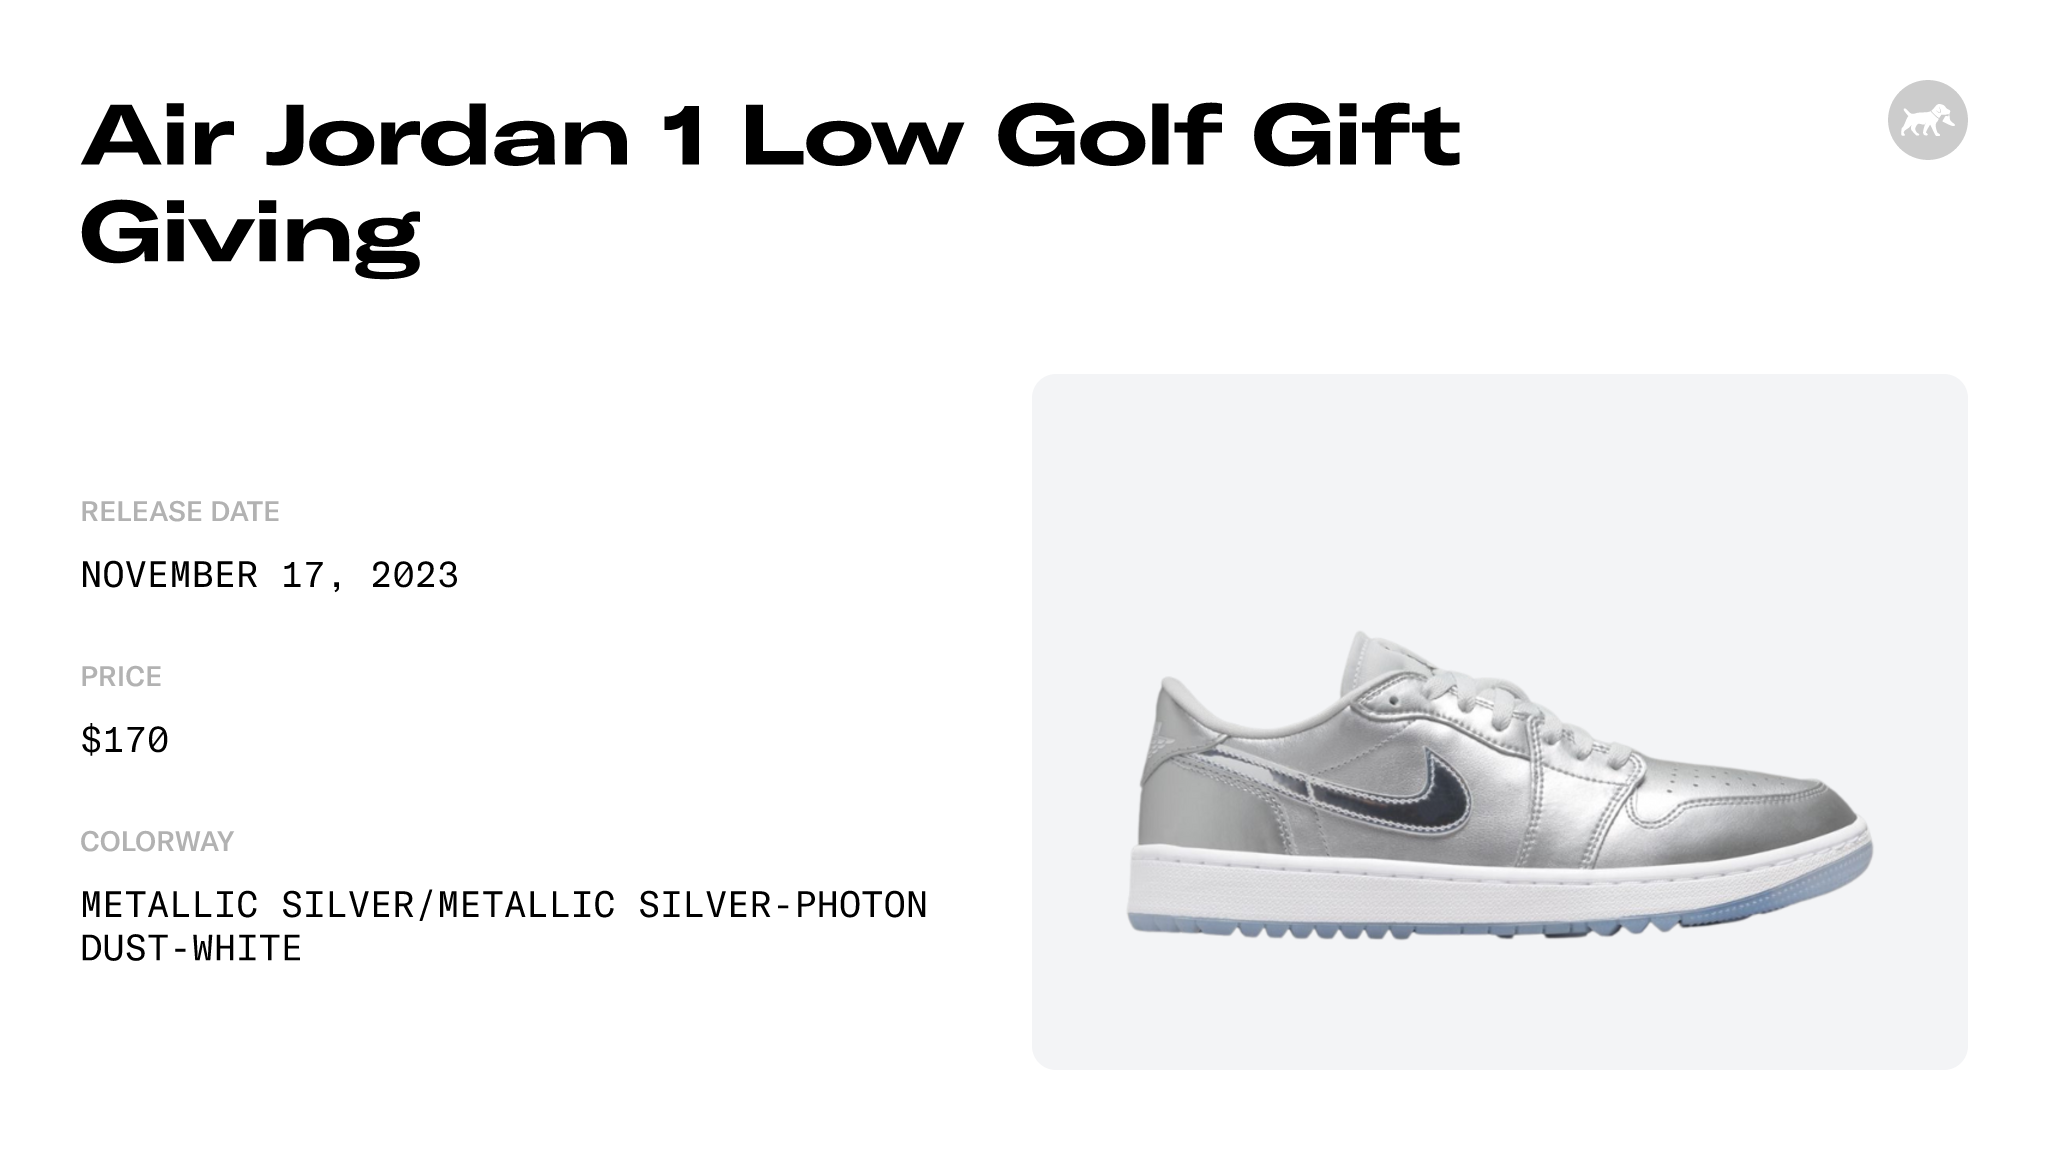 Air Jordan 1 Low Golf Gift Giving - FD6848-001 Raffles and Release Date